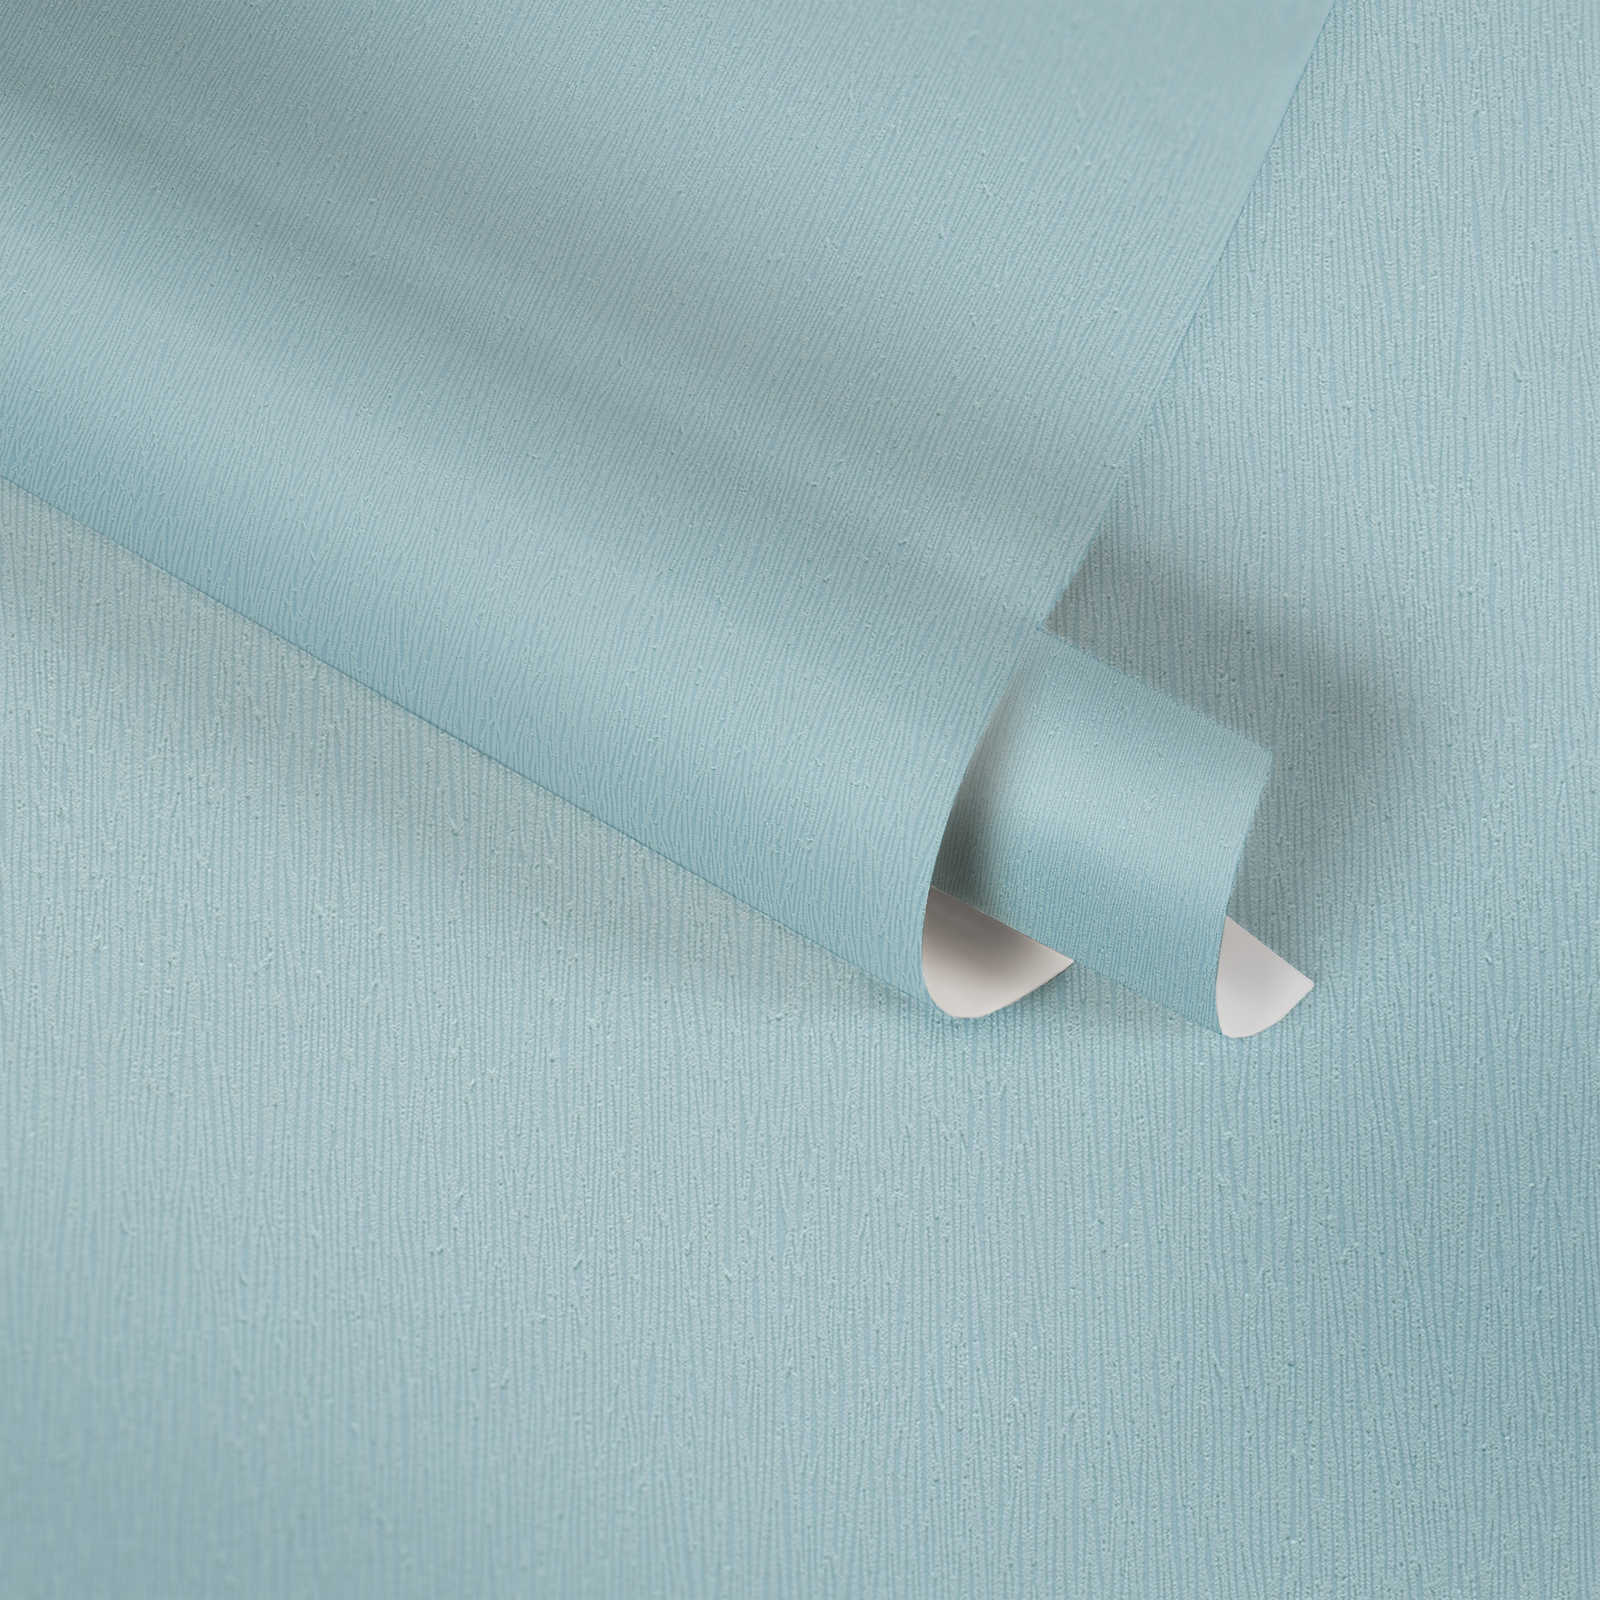             Baby blue non-woven wallpaper with plain texture design - green
        